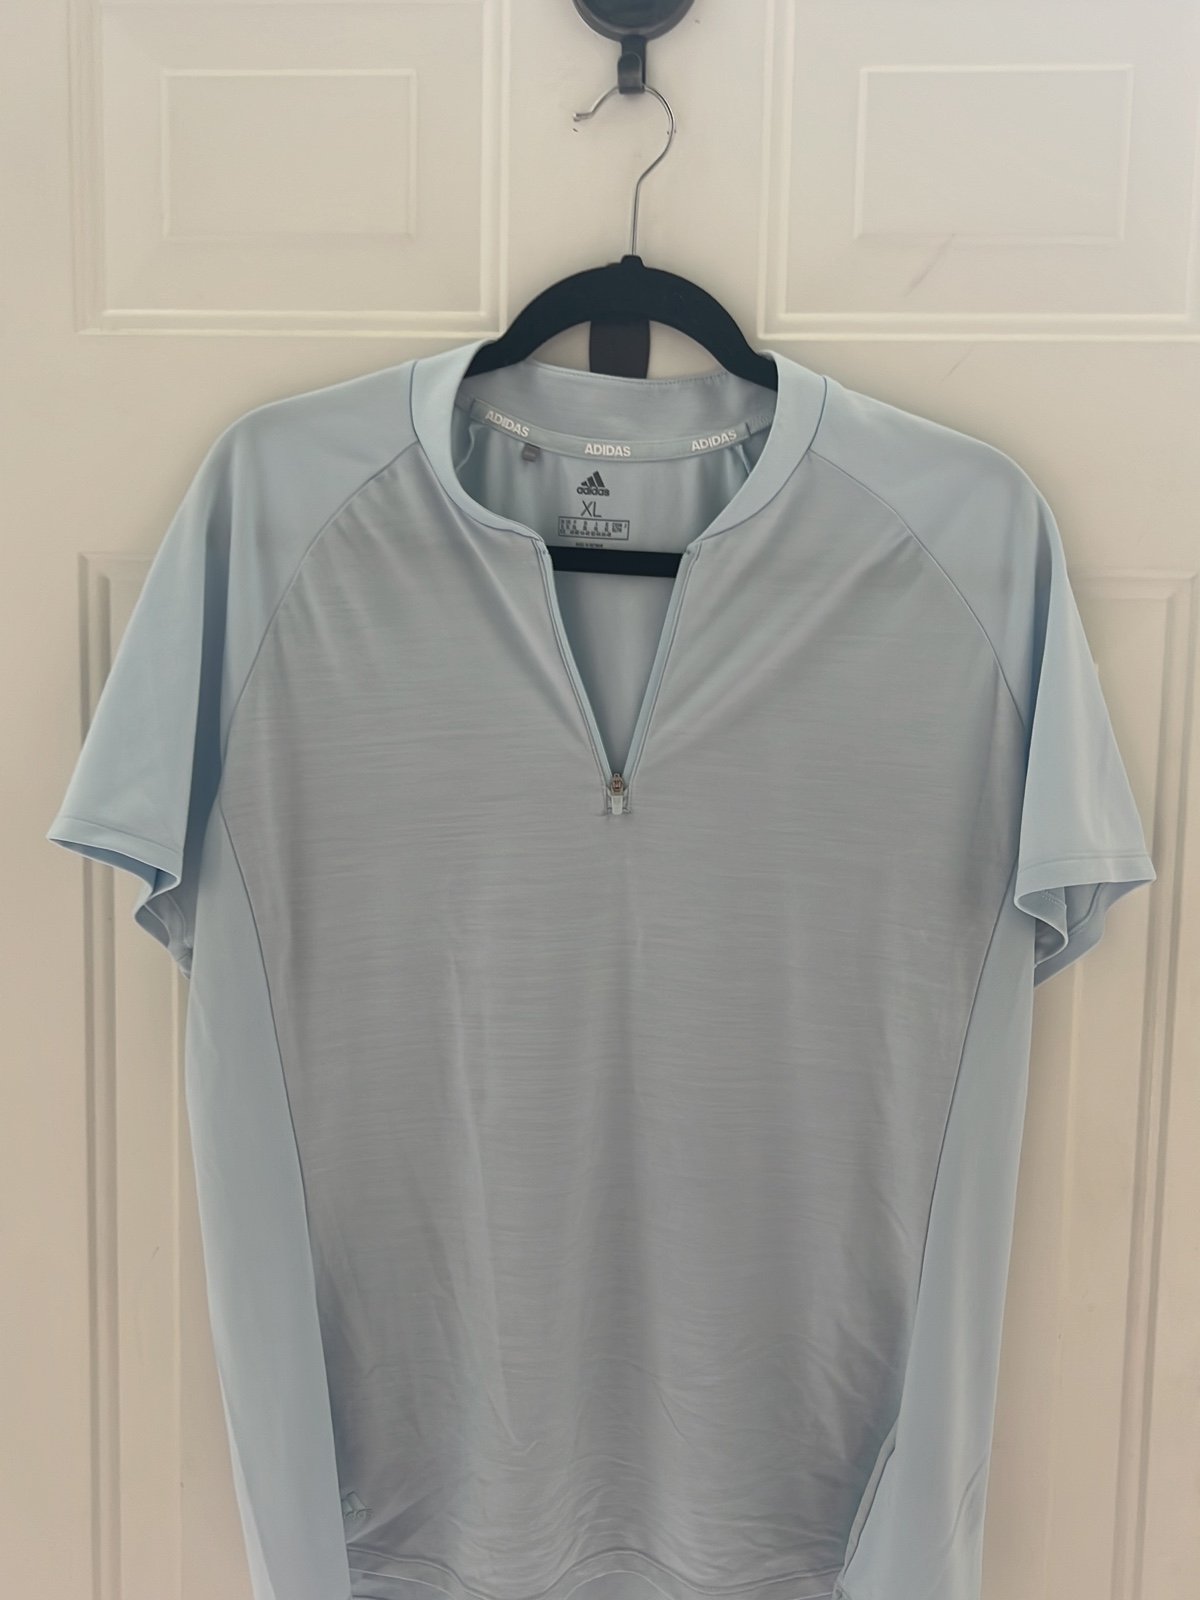 reasonable price Adidas golf shirt pCVU3vloB Store Online